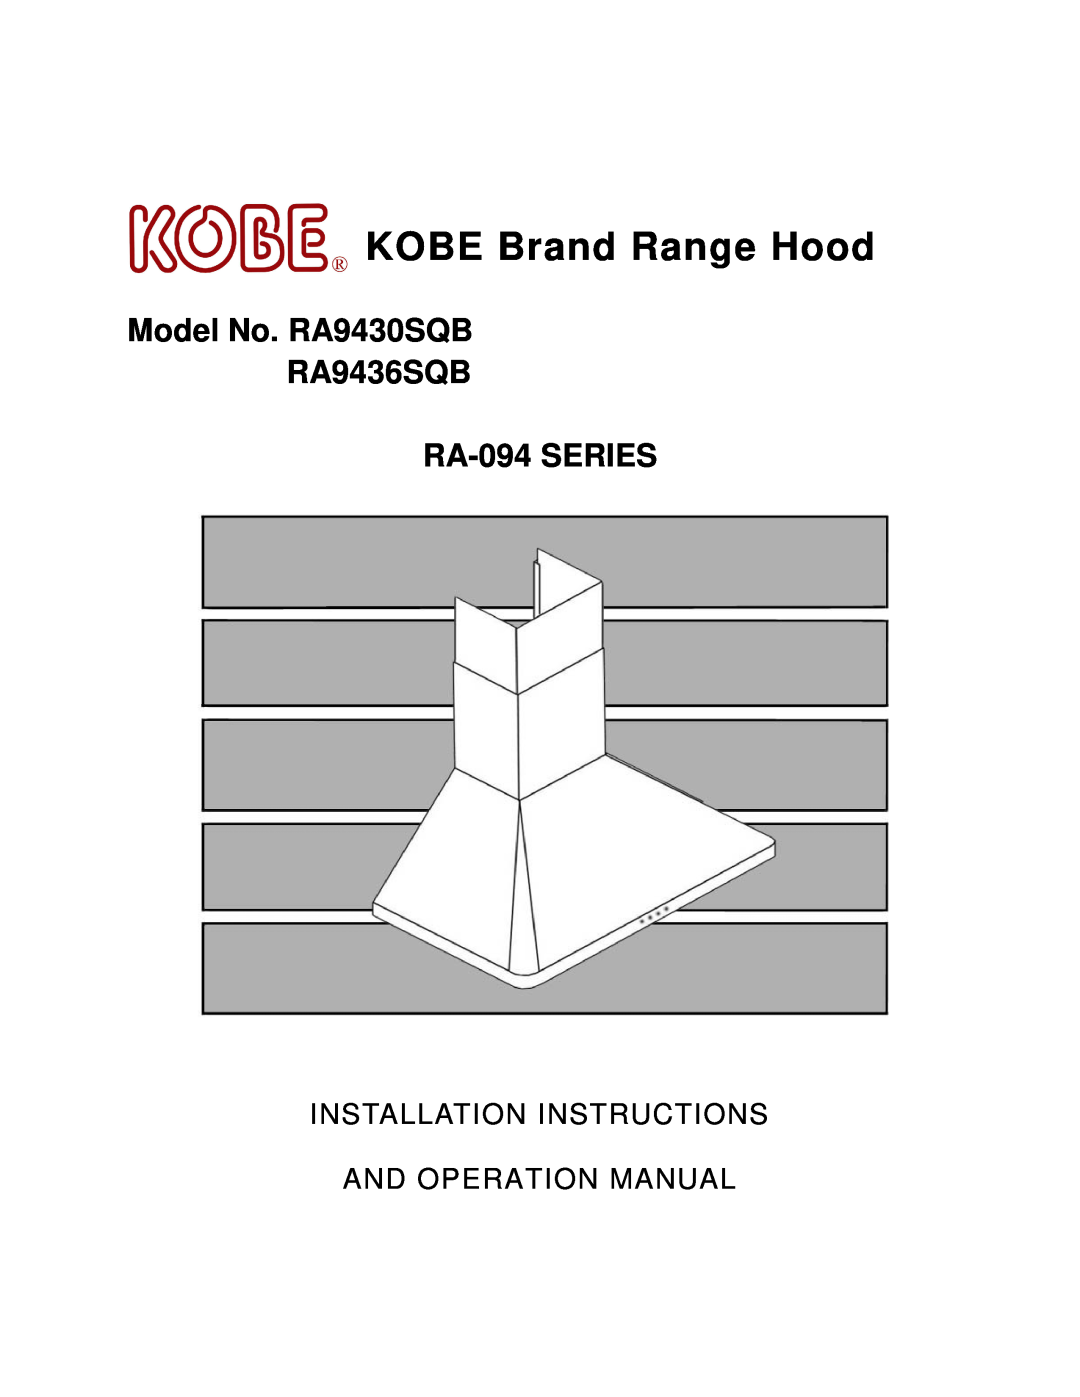 Kobe Range Hoods manual KOBE Brand Range Hood, Model No. RA9430SQB RA9436SQB RA-094SERIES 